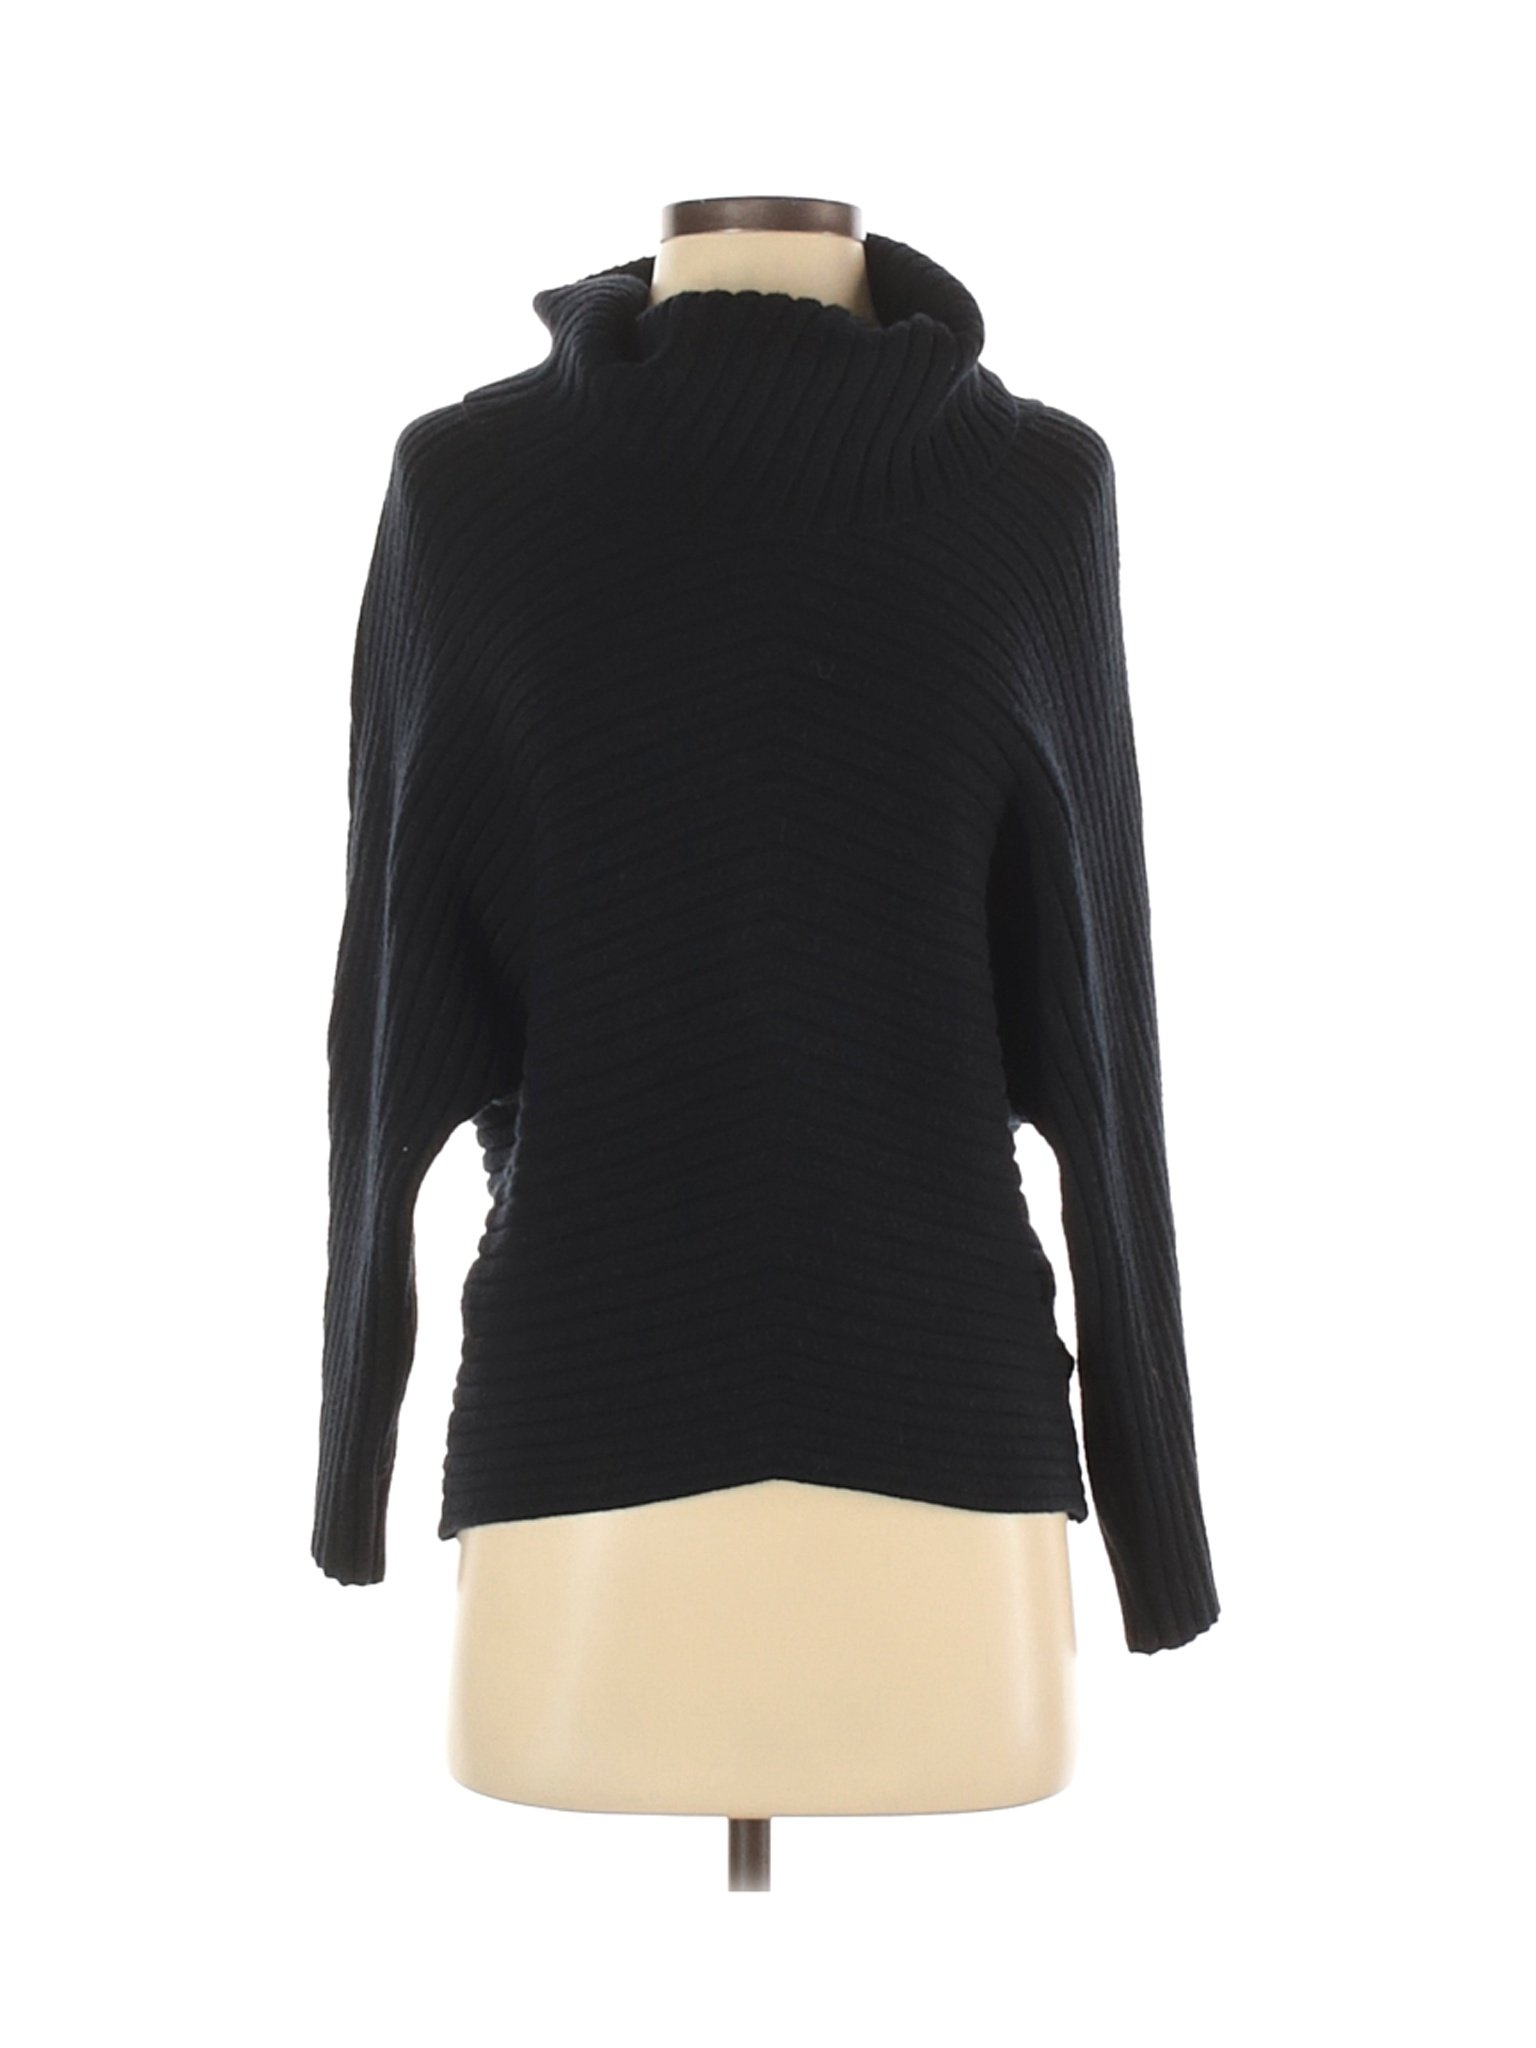 Philosophy Republic Clothing Women Black Pullover Sweater S | eBay